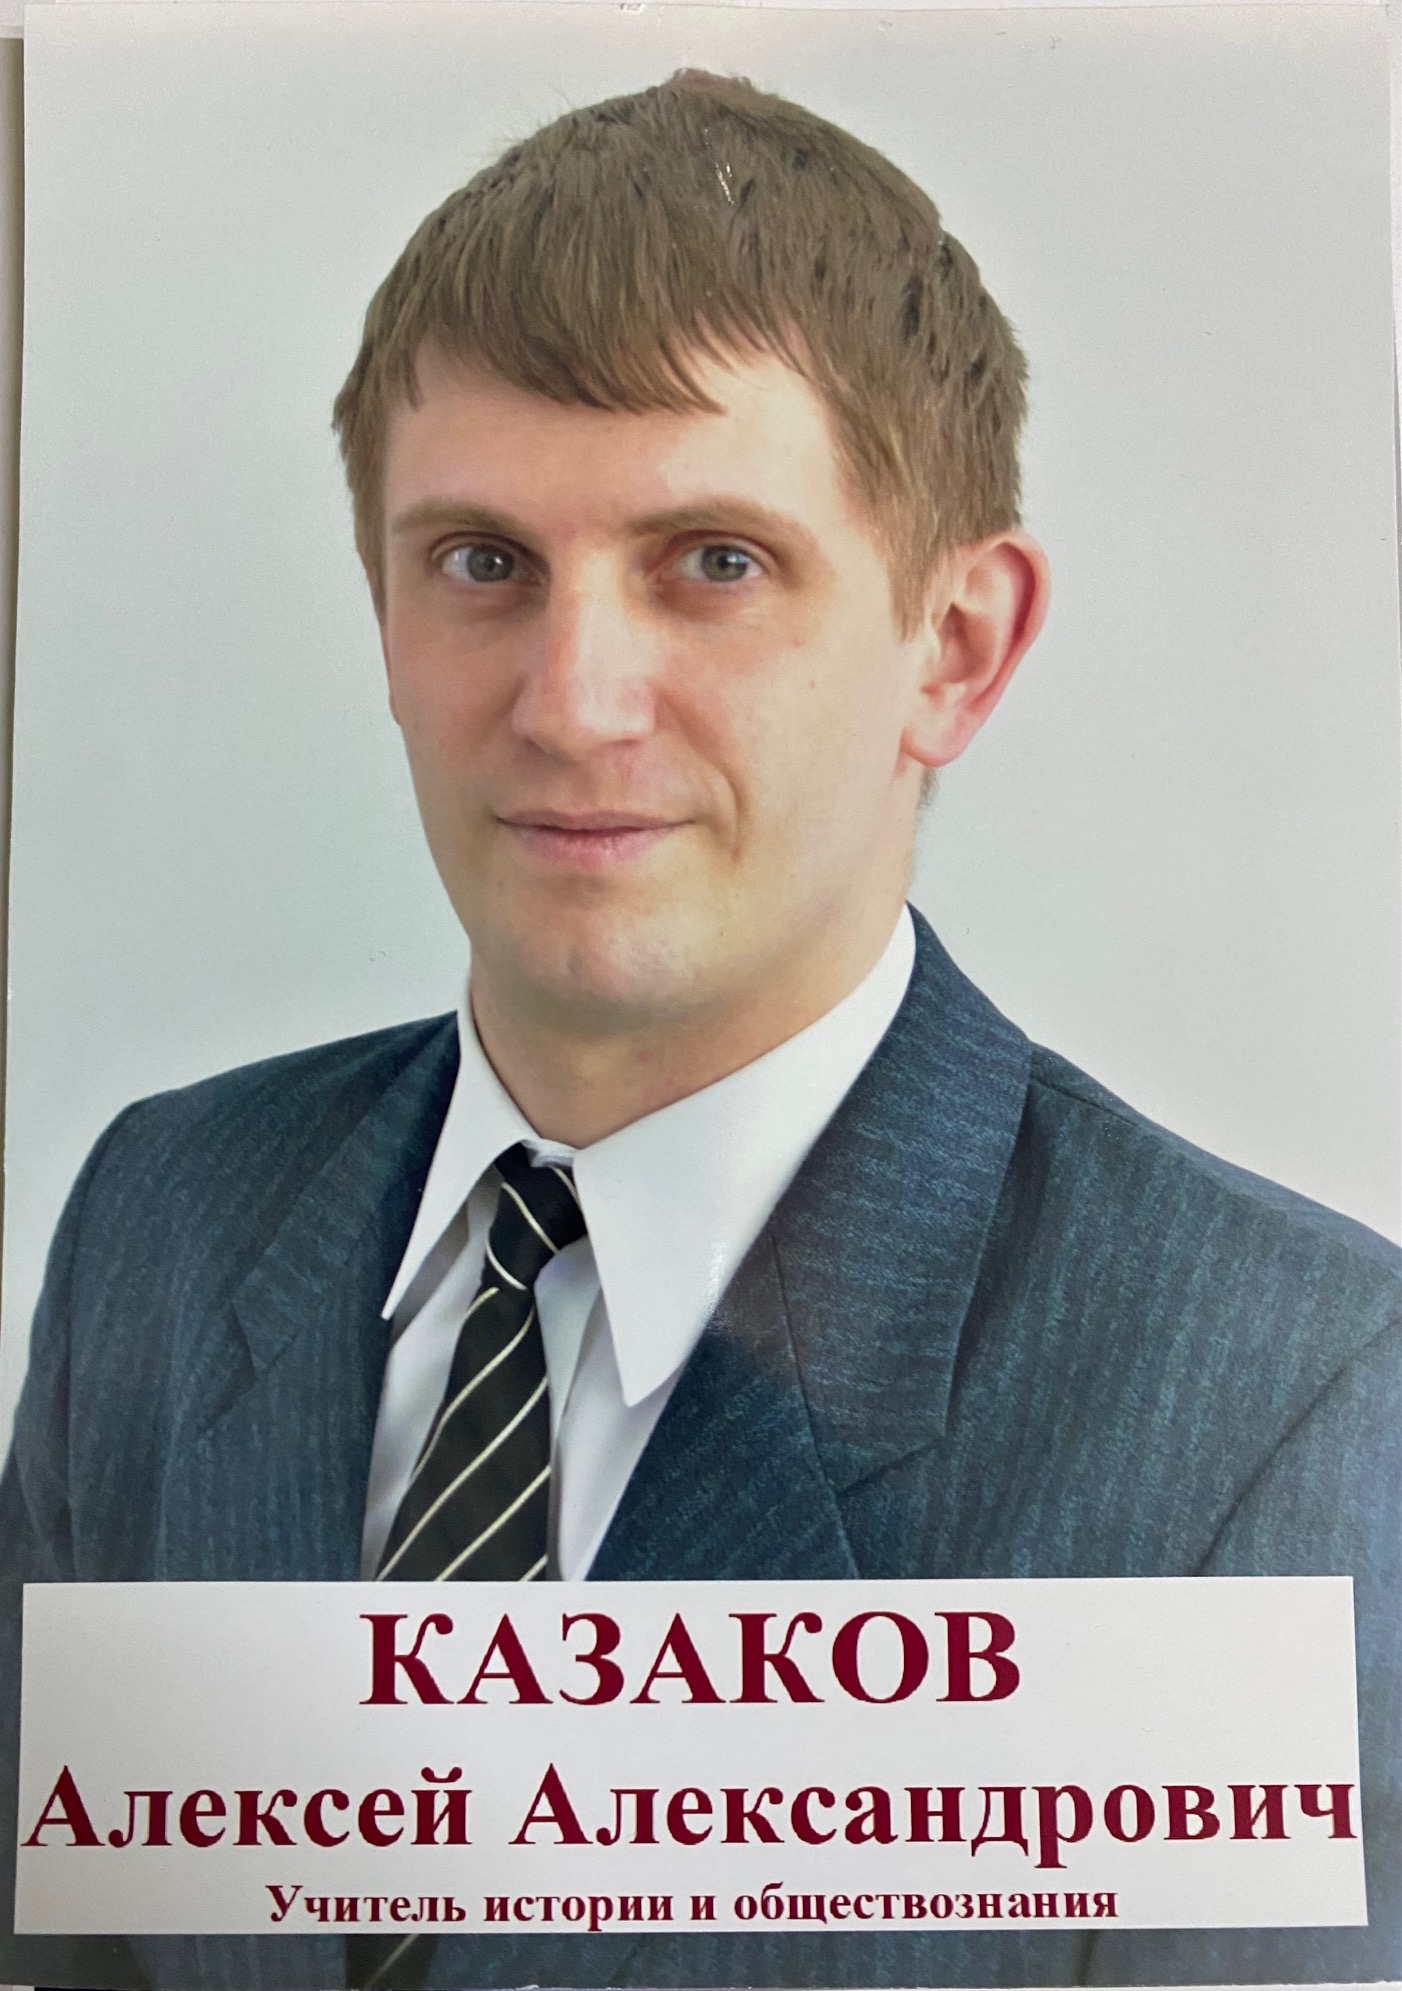 Казаков Алексей Александрович.